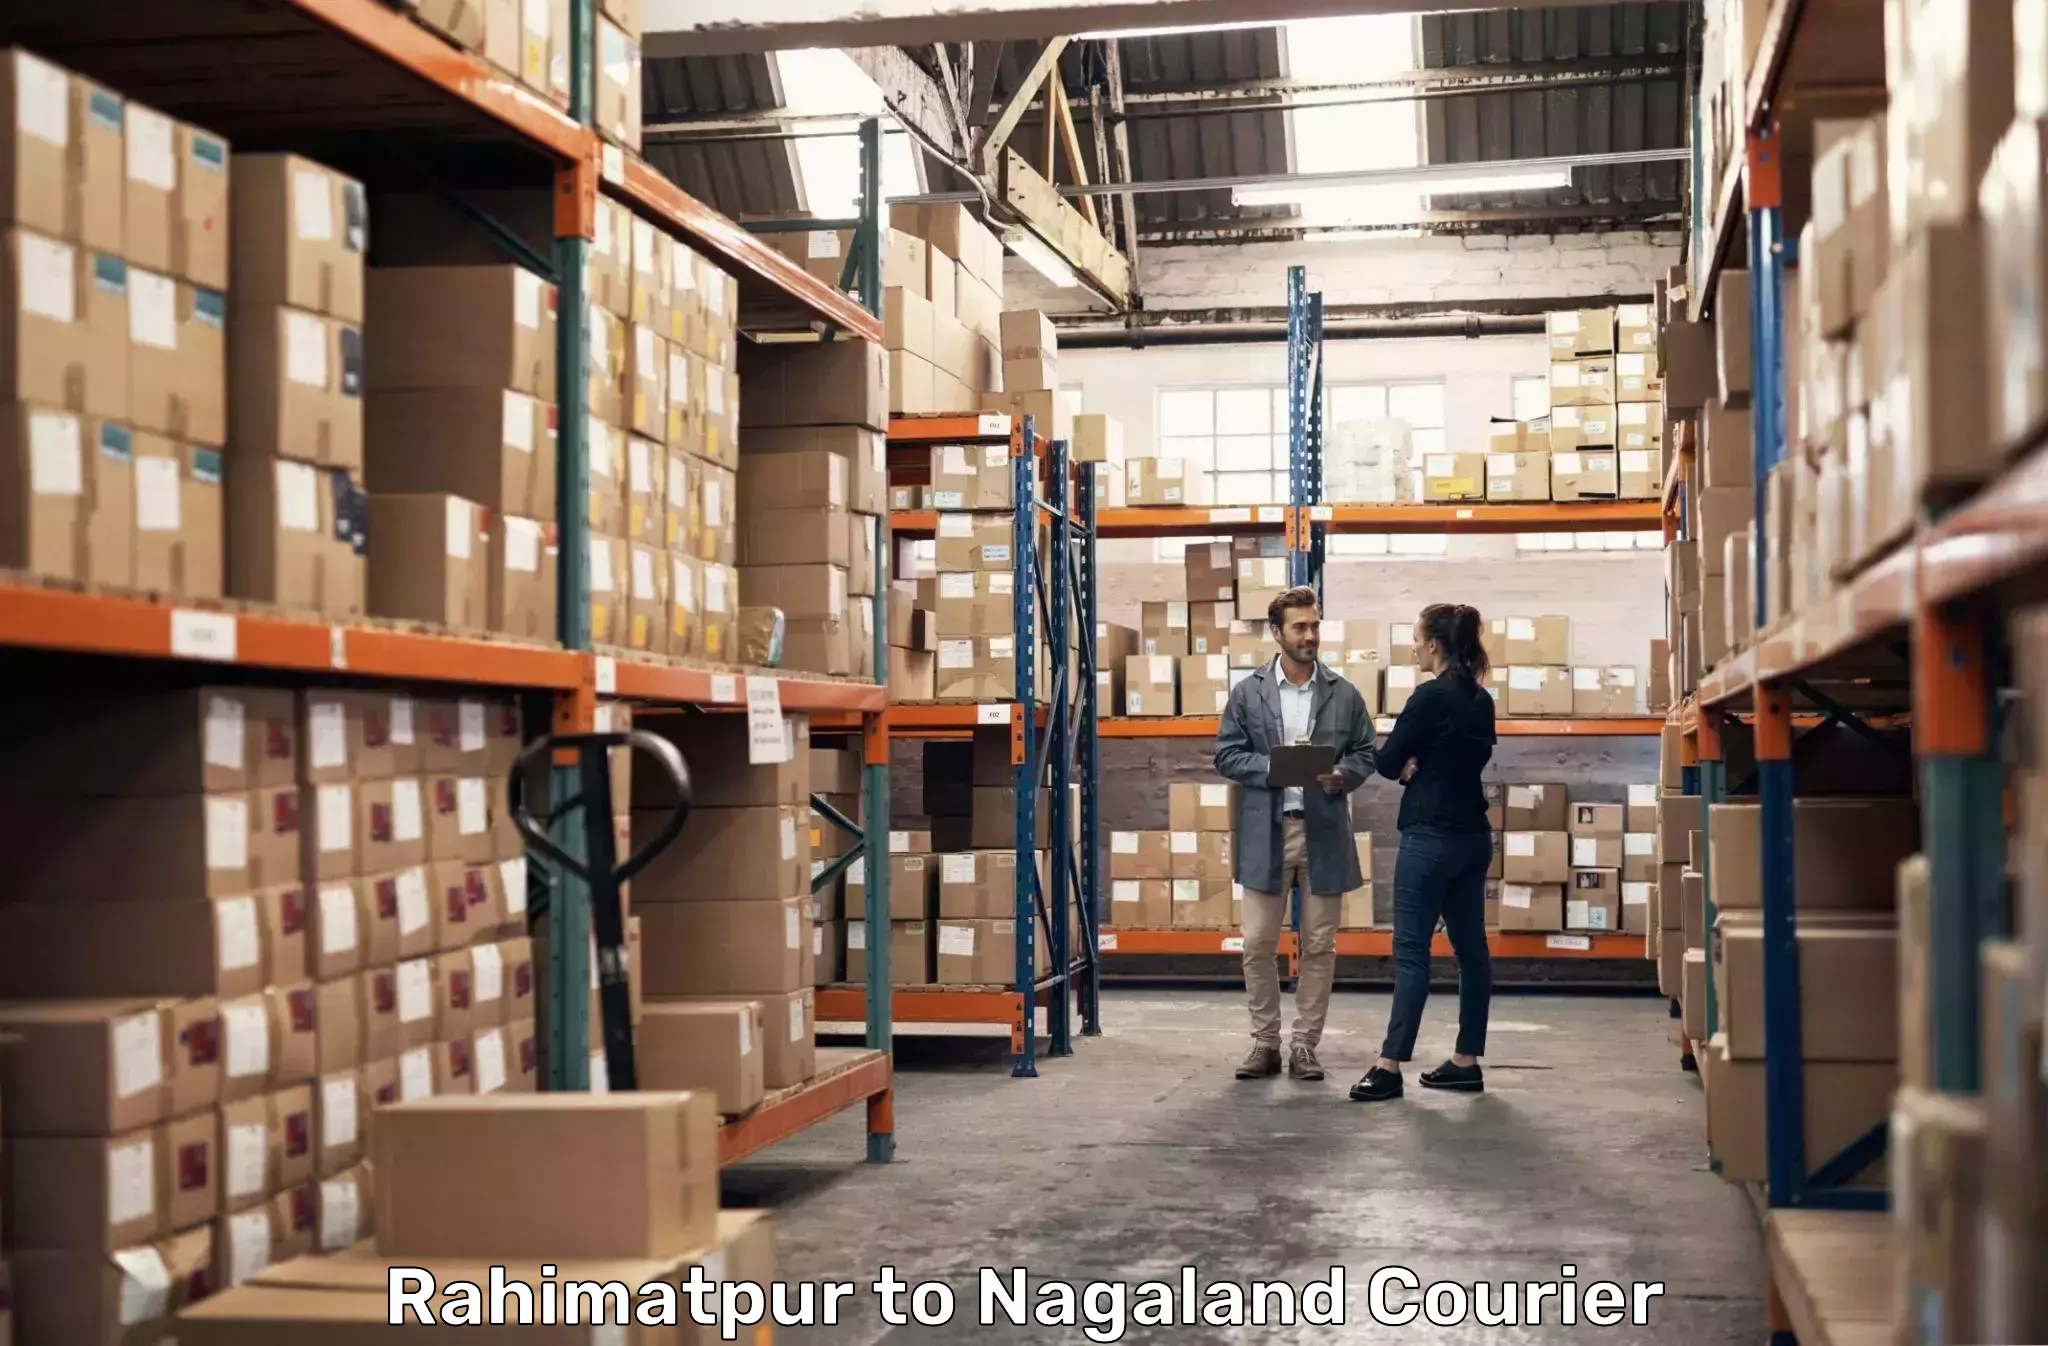 Courier service efficiency Rahimatpur to Kohima